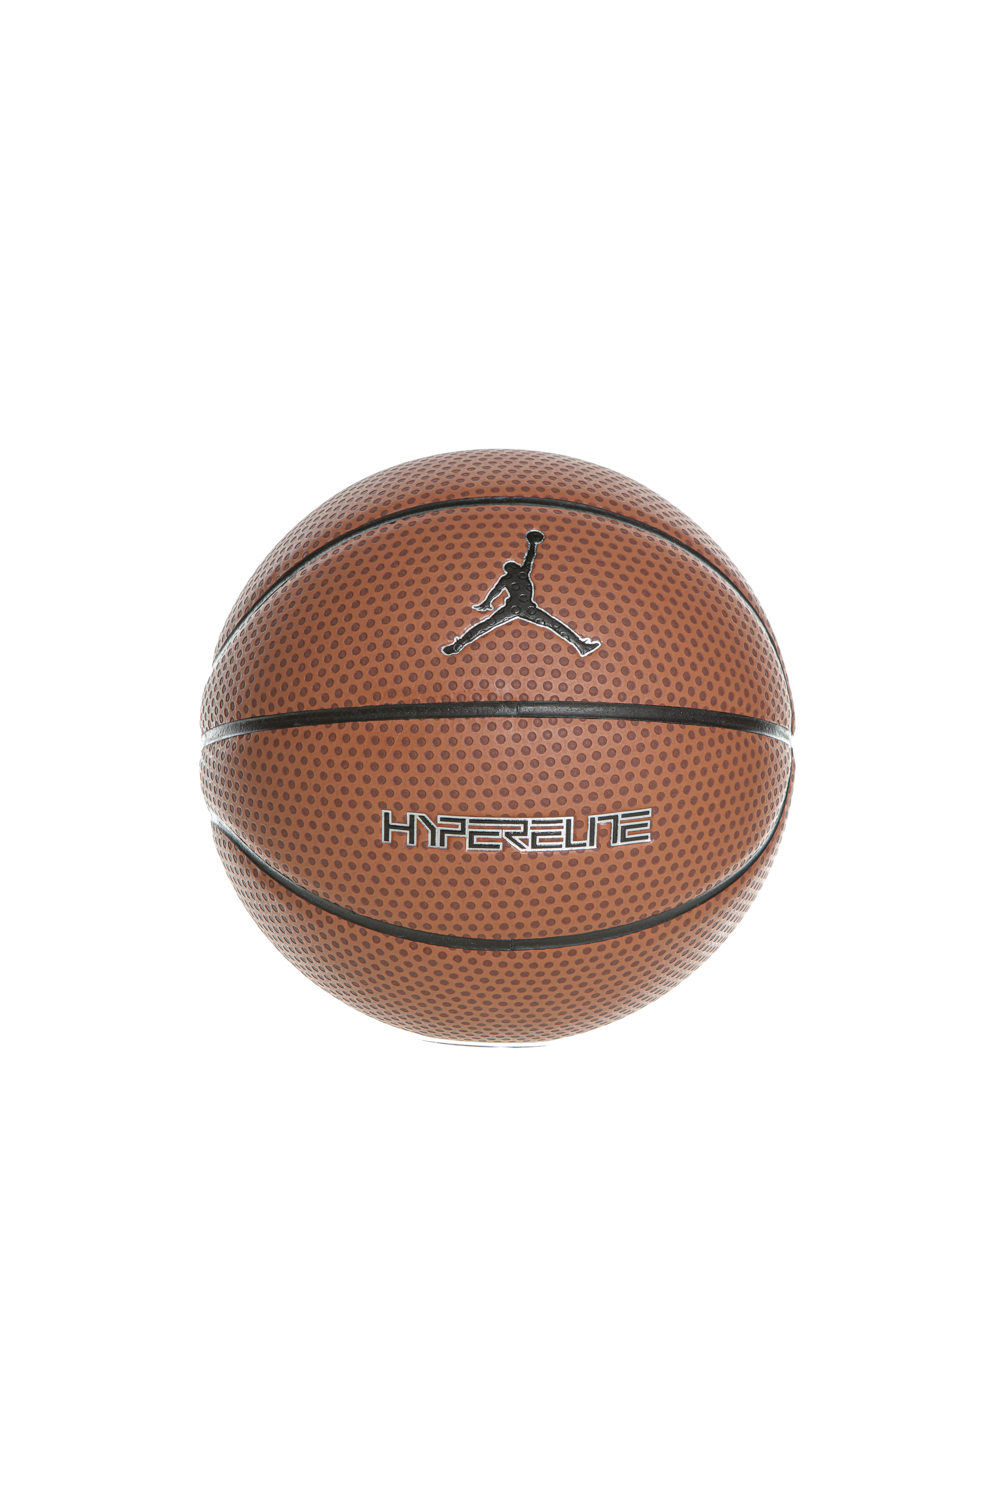 NIKE ACCESSORIES - Μπάλα μπάσκετ JORDAN HYPER ELITE 8P καφέ SPORTS/Μπάσκετ/Μπάλες